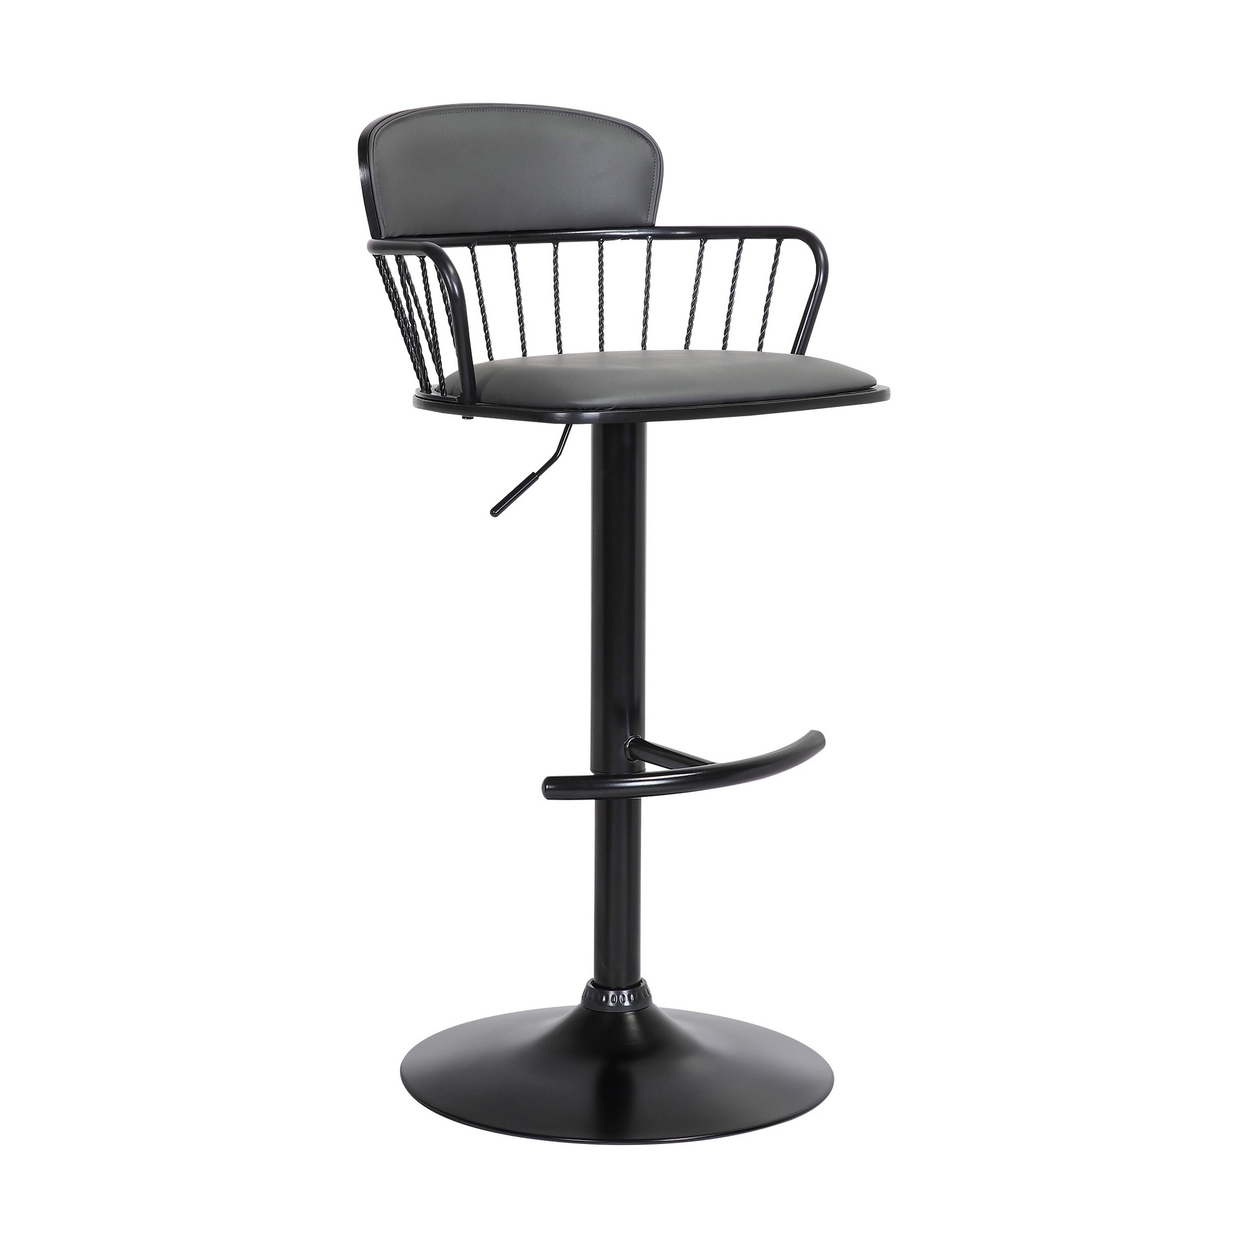 Nish 25-33 Inch Adjustable Barstool Chair, Gray Faux Leather, Black Frame - Saltoro Sherpi